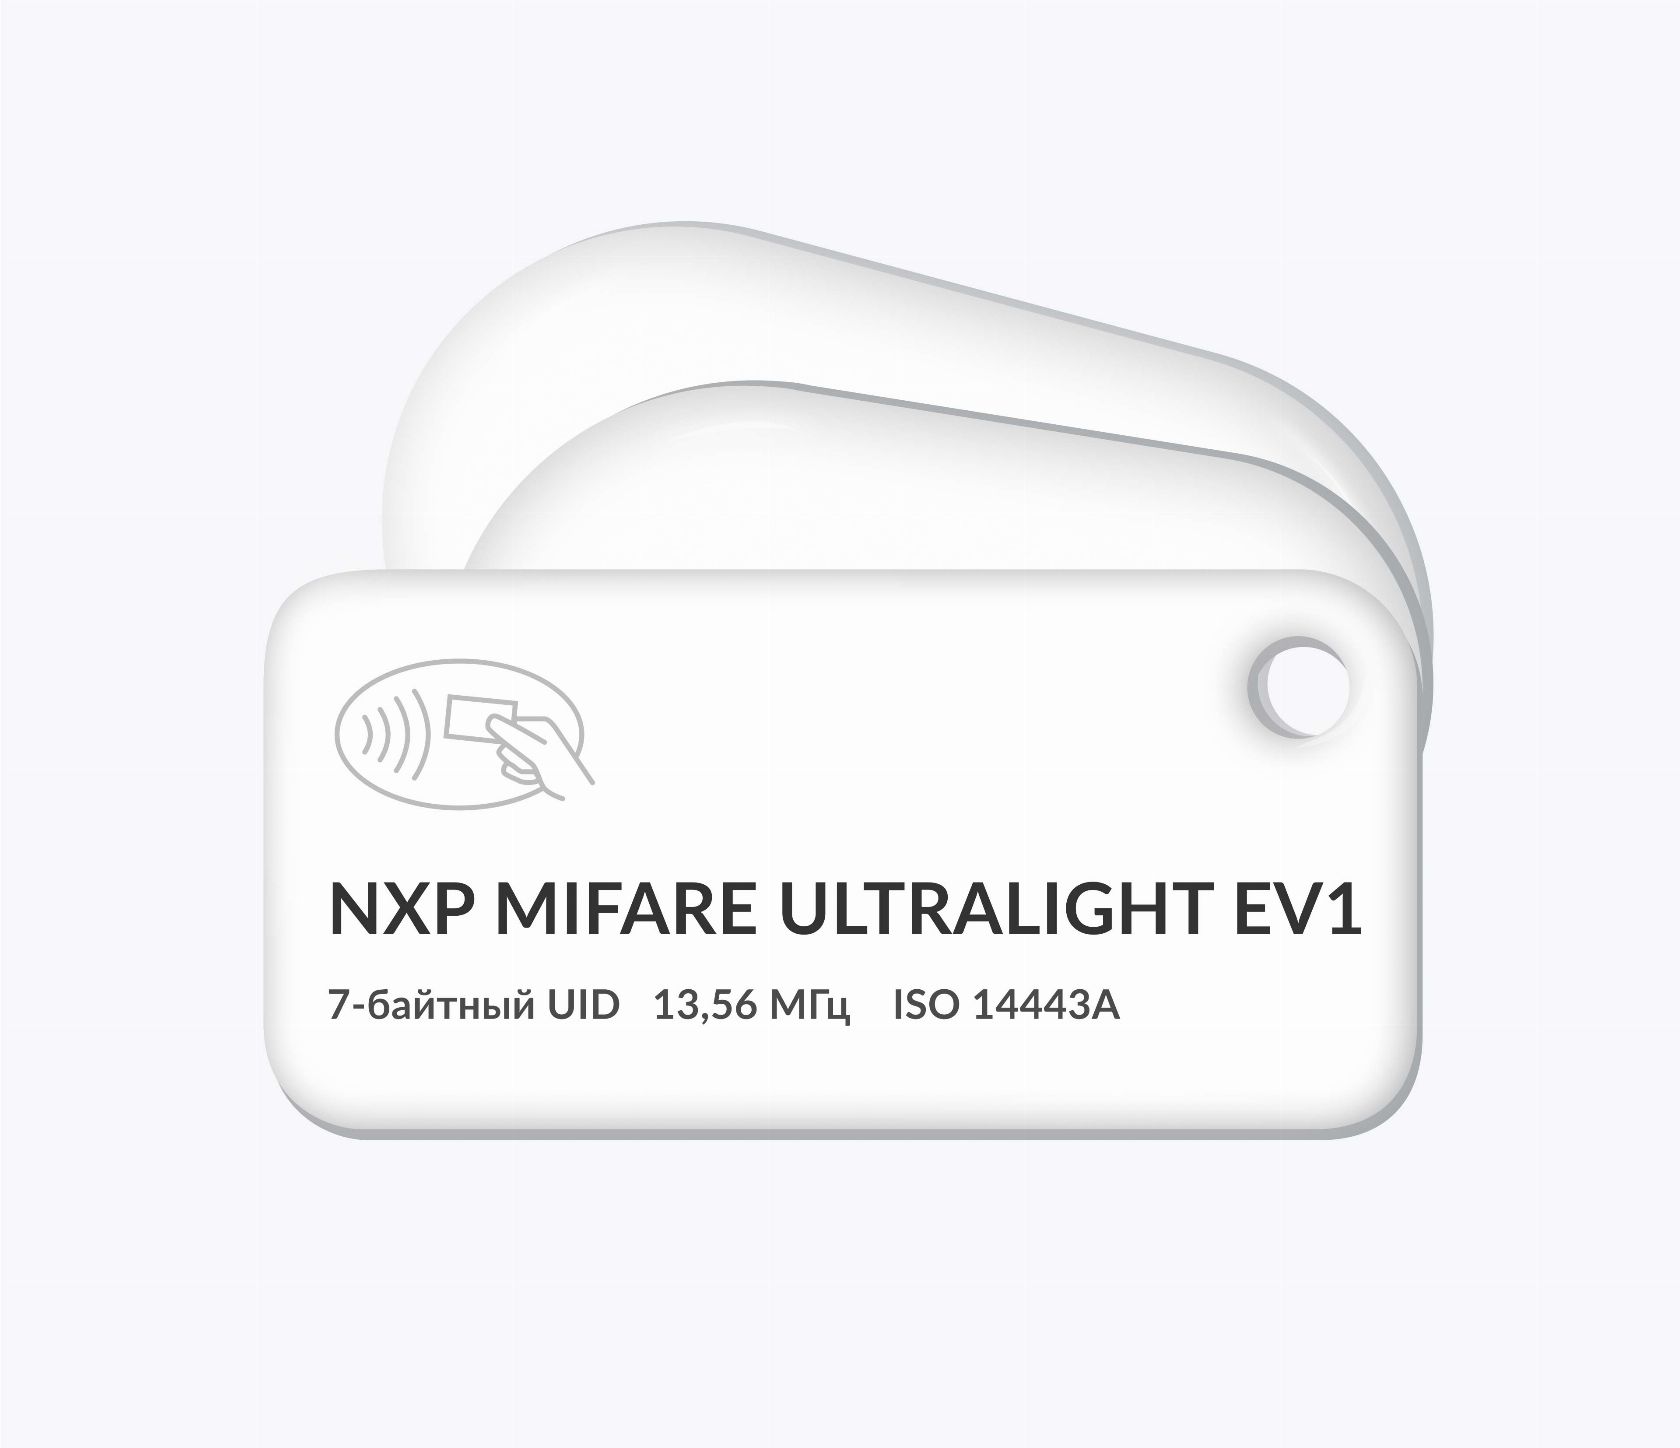 RFID-брелоки NEOKEY® с чипом NXP MIFARE Ultralight EV1 7 byte UID и вашим логотипом RFID-брелоки NEOKEY® с чипом NXP MIFARE Ultralight EV1 7 byte UID и вашим логотипом